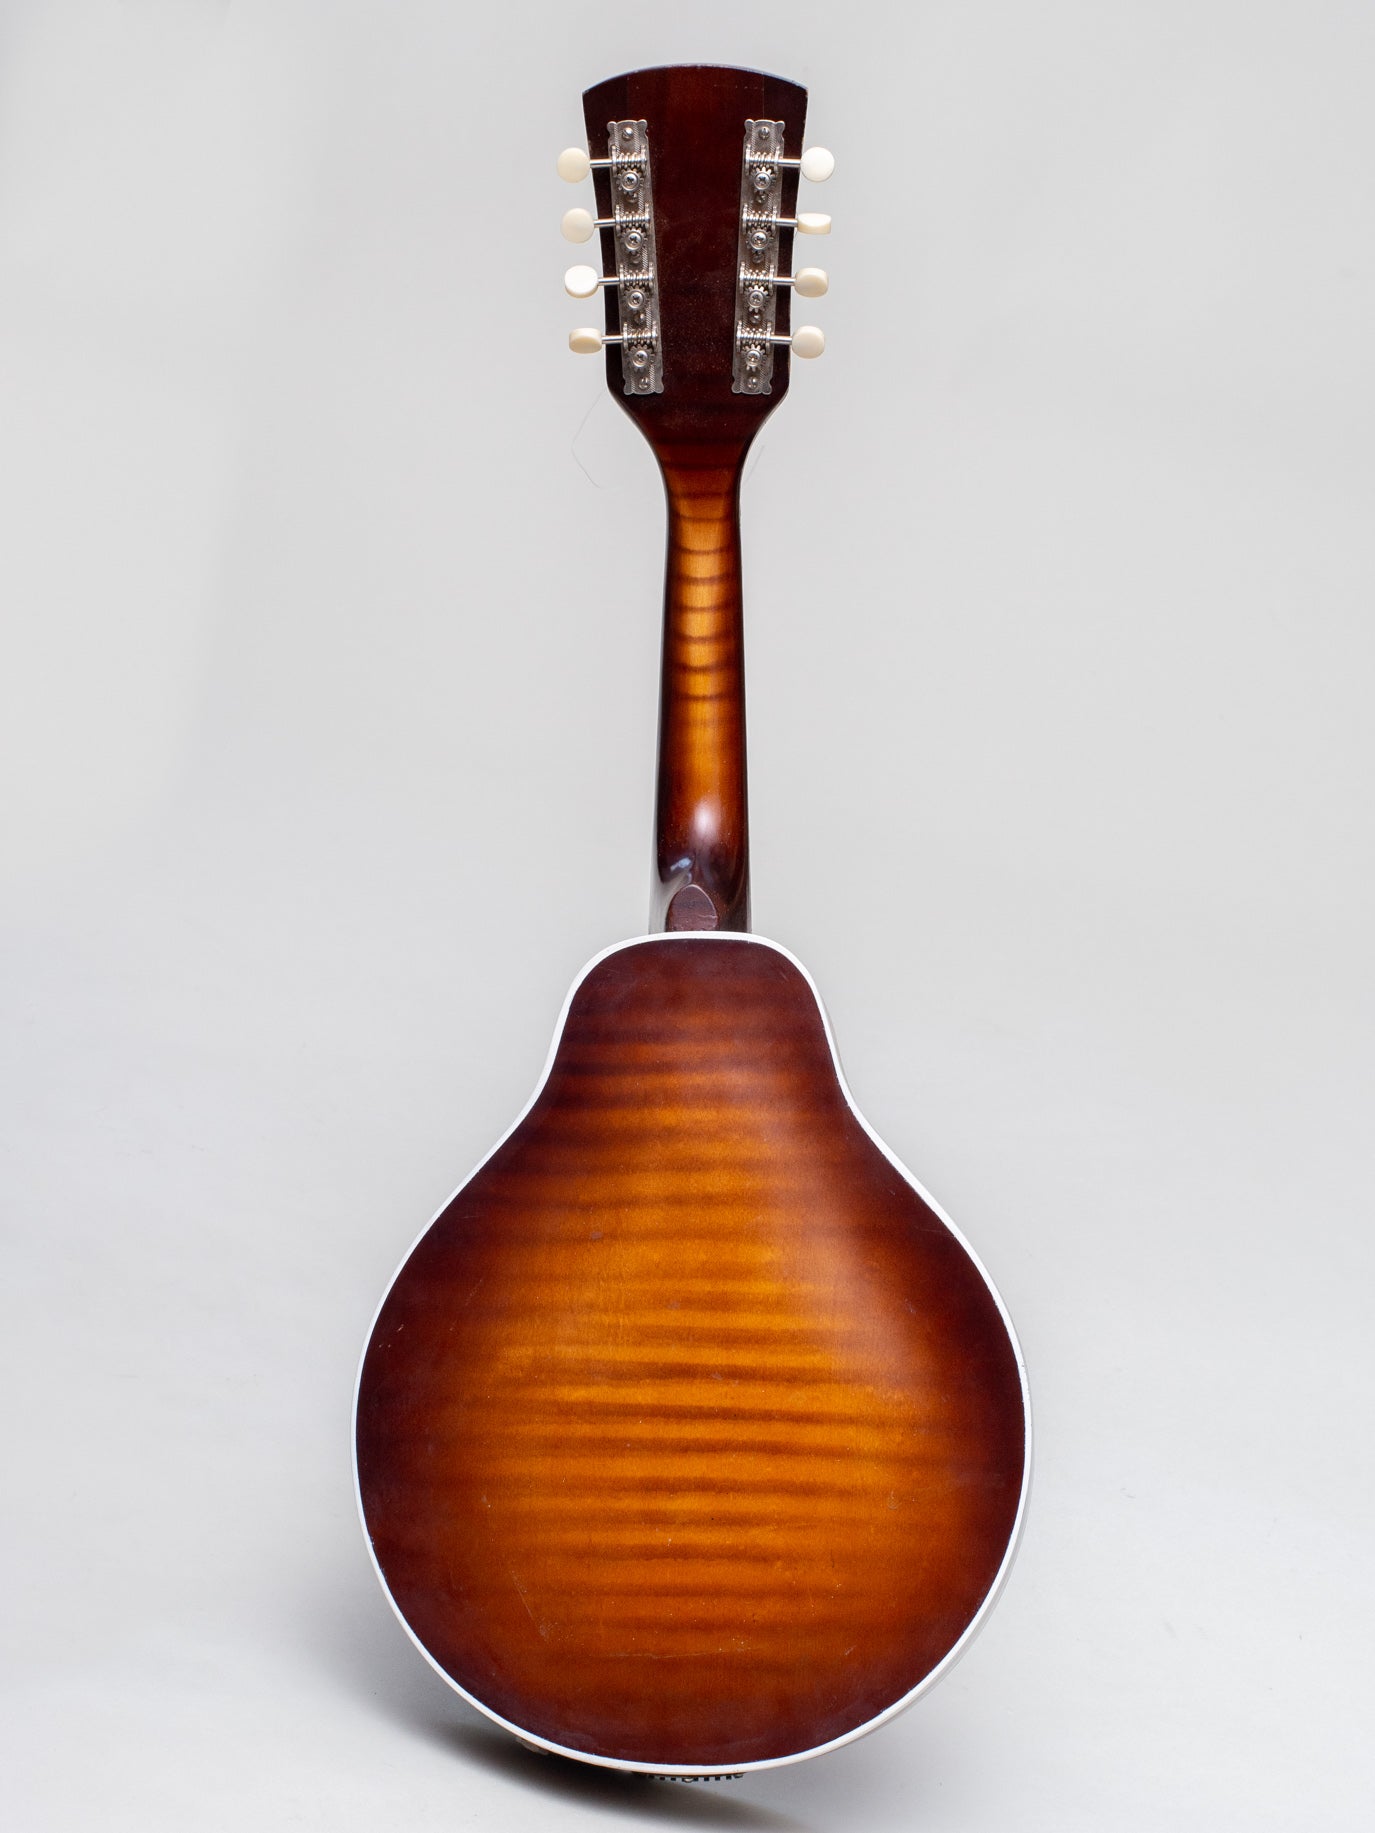 1950s Kay Electric Mandolin